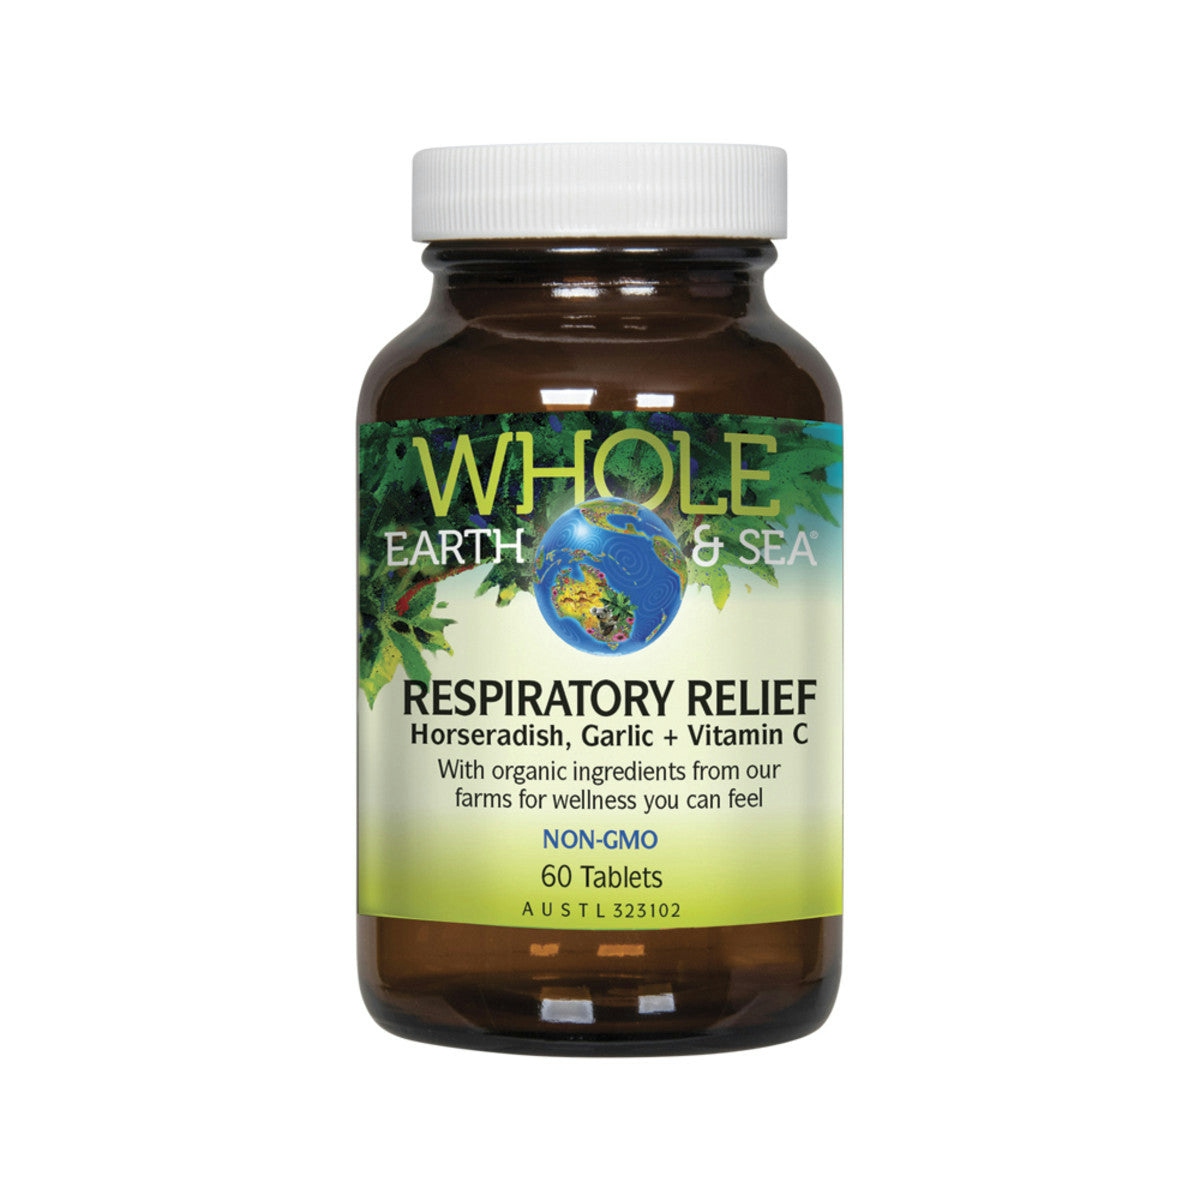 image of Whole Earth & Sea Respiratory Relief (Horseradish, Garlic + Vitamin C) 60t on white background 